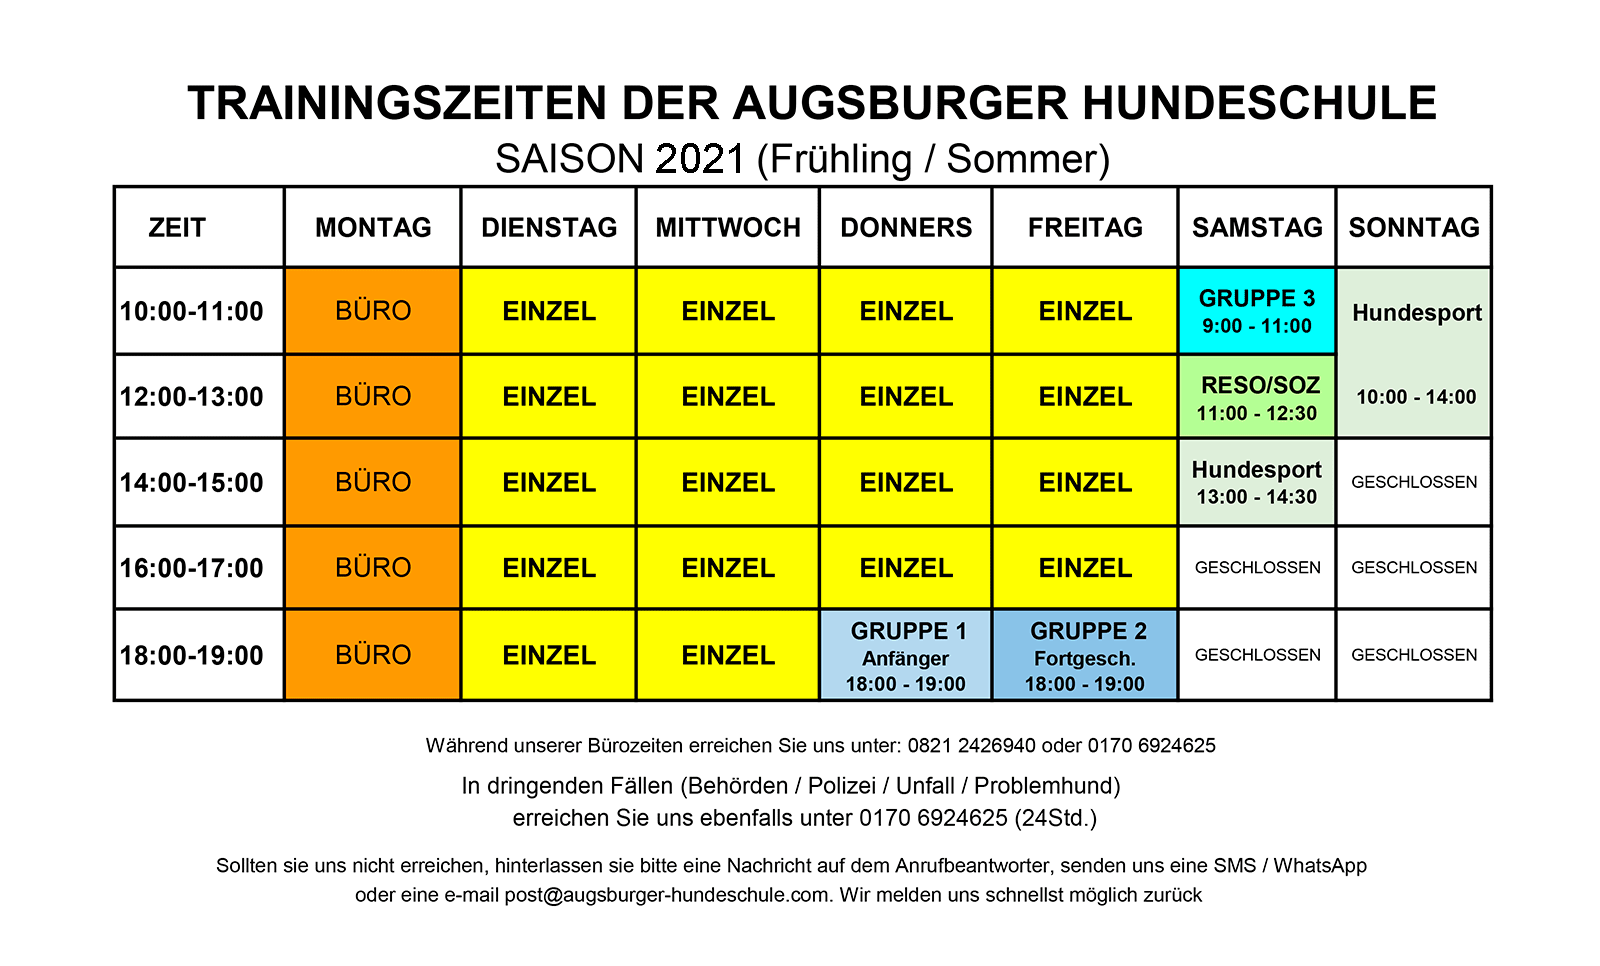 Training Wochenplan Augsburger Hundeschule